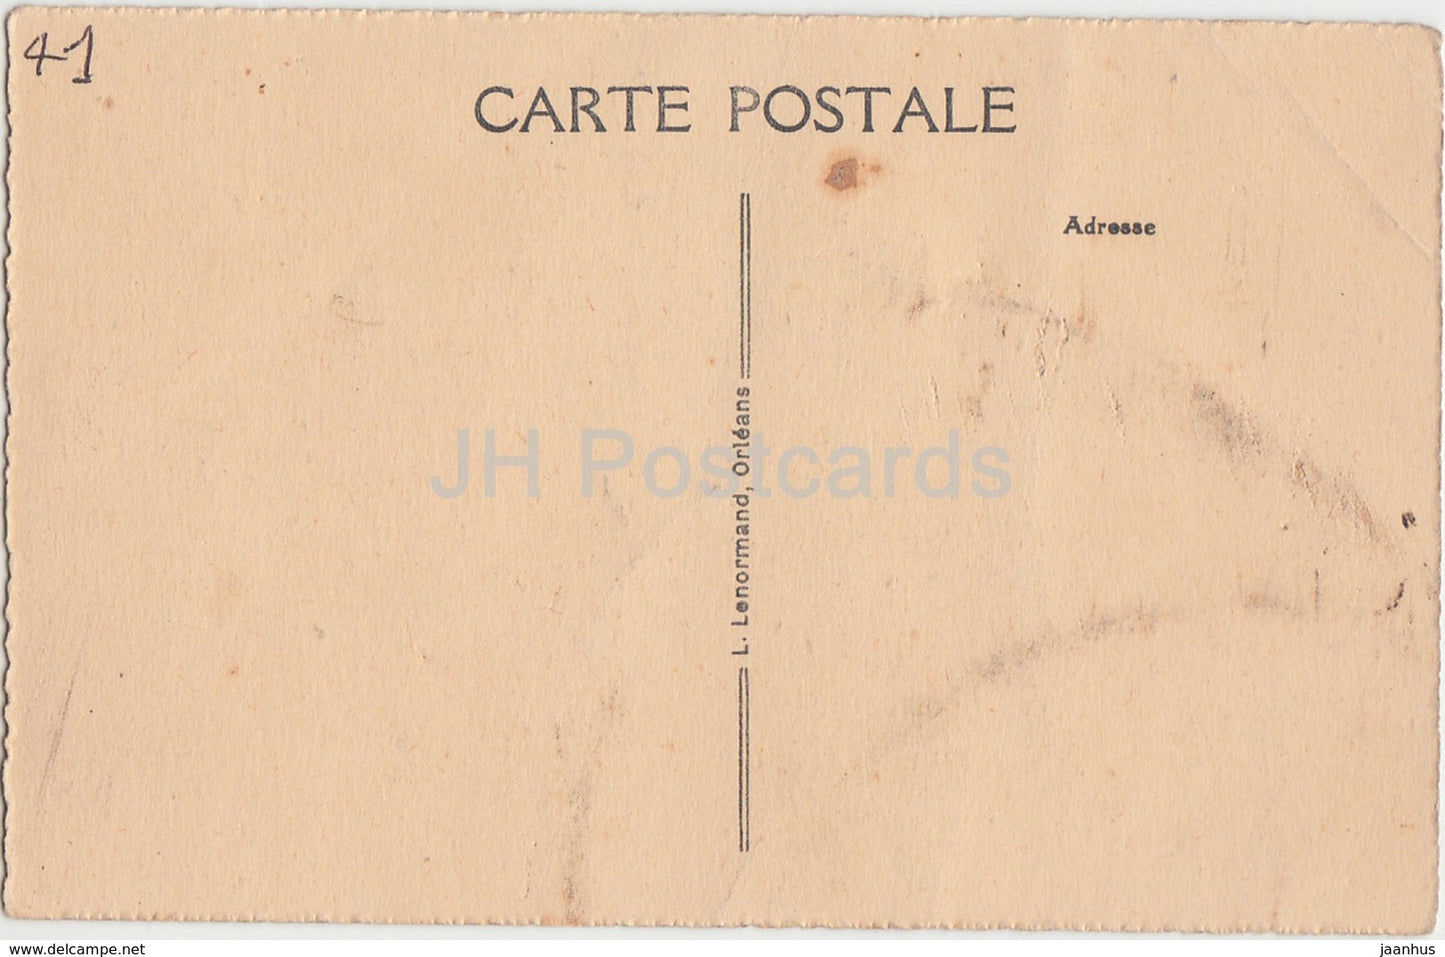 Lamotte Beuvron - Château de Bouchetin - château - carte postale ancienne - France - inutilisé